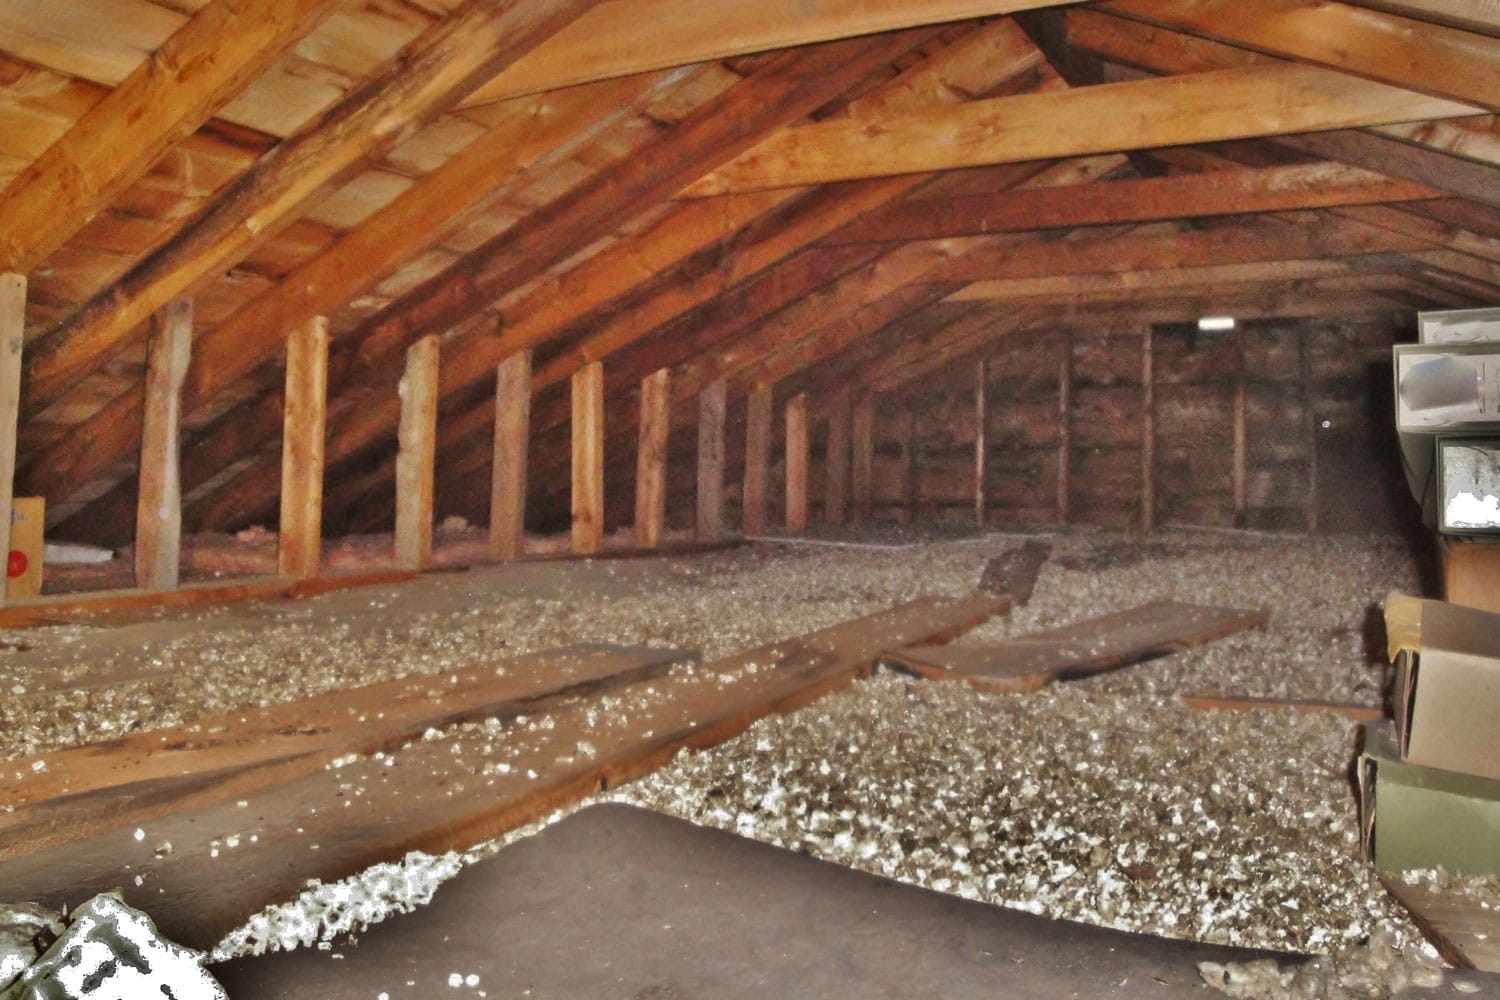 Asbestos insulation sprayed across the attic flooring